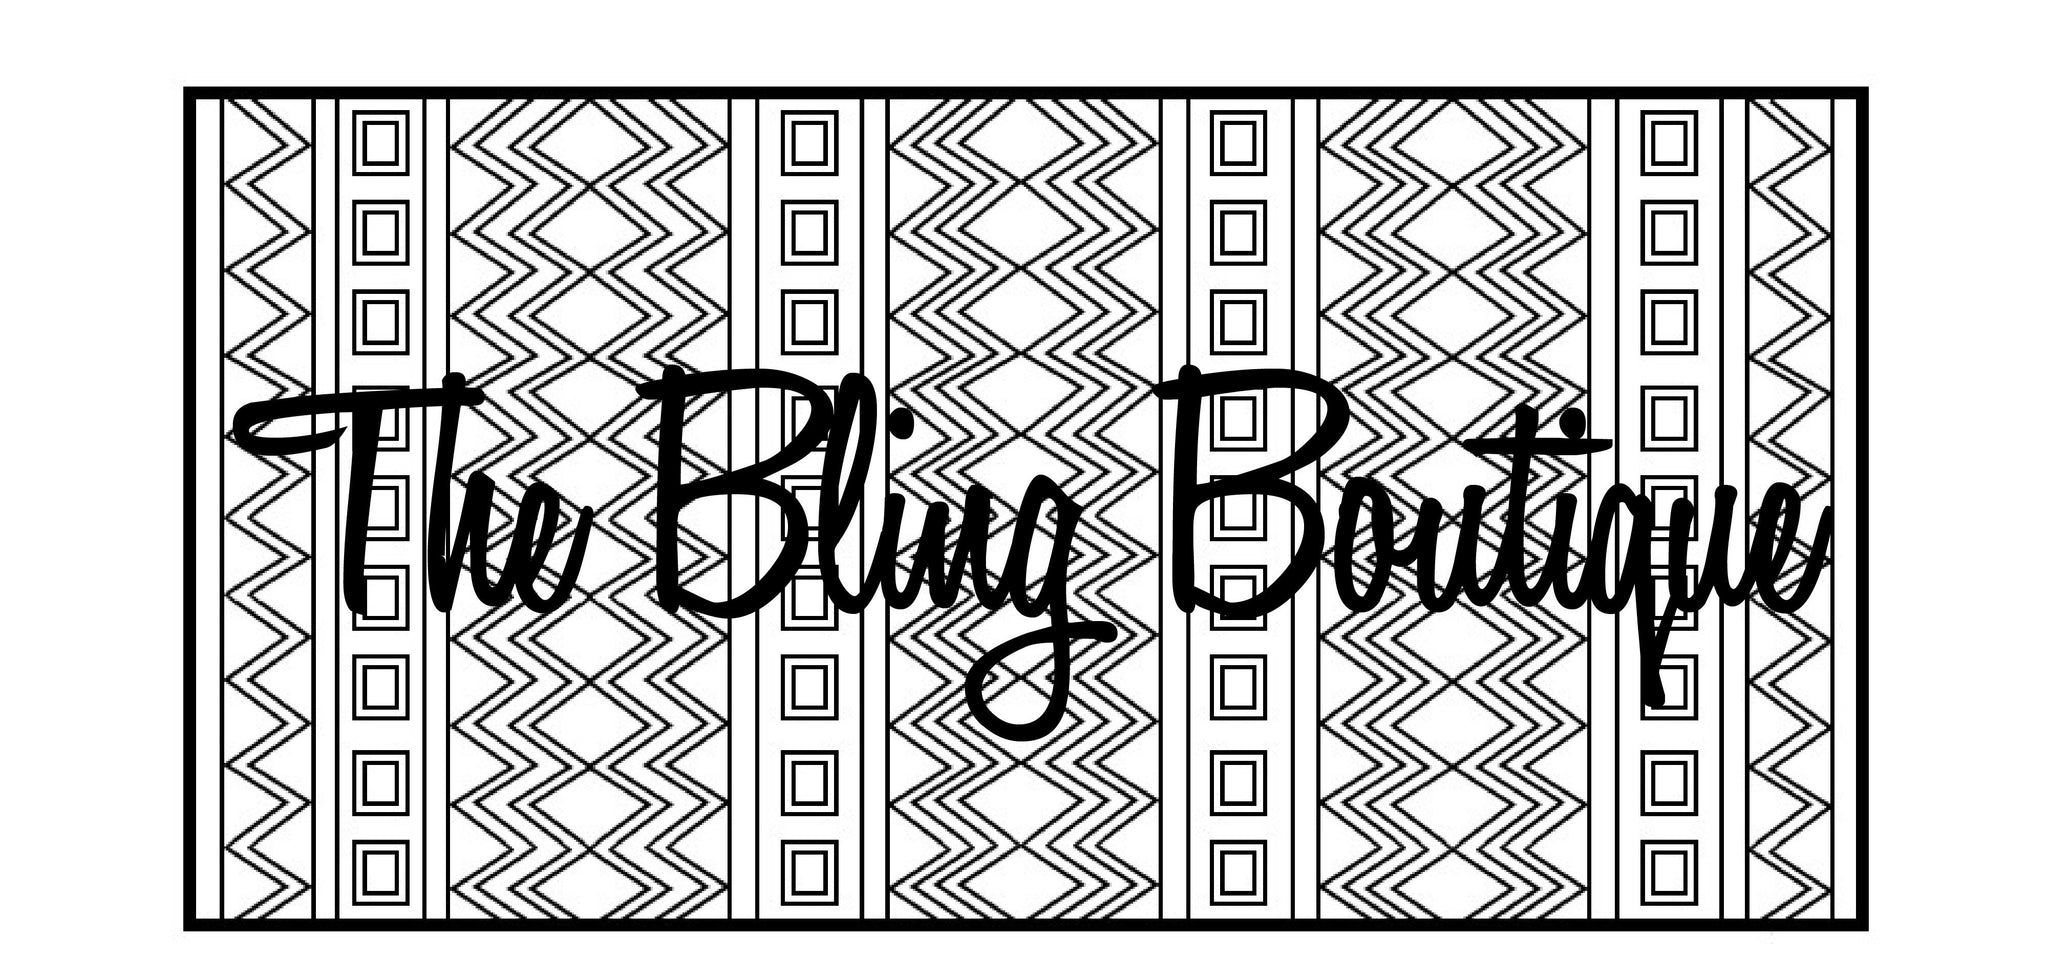 Custom Bling Boutique Show Pad - Design #3